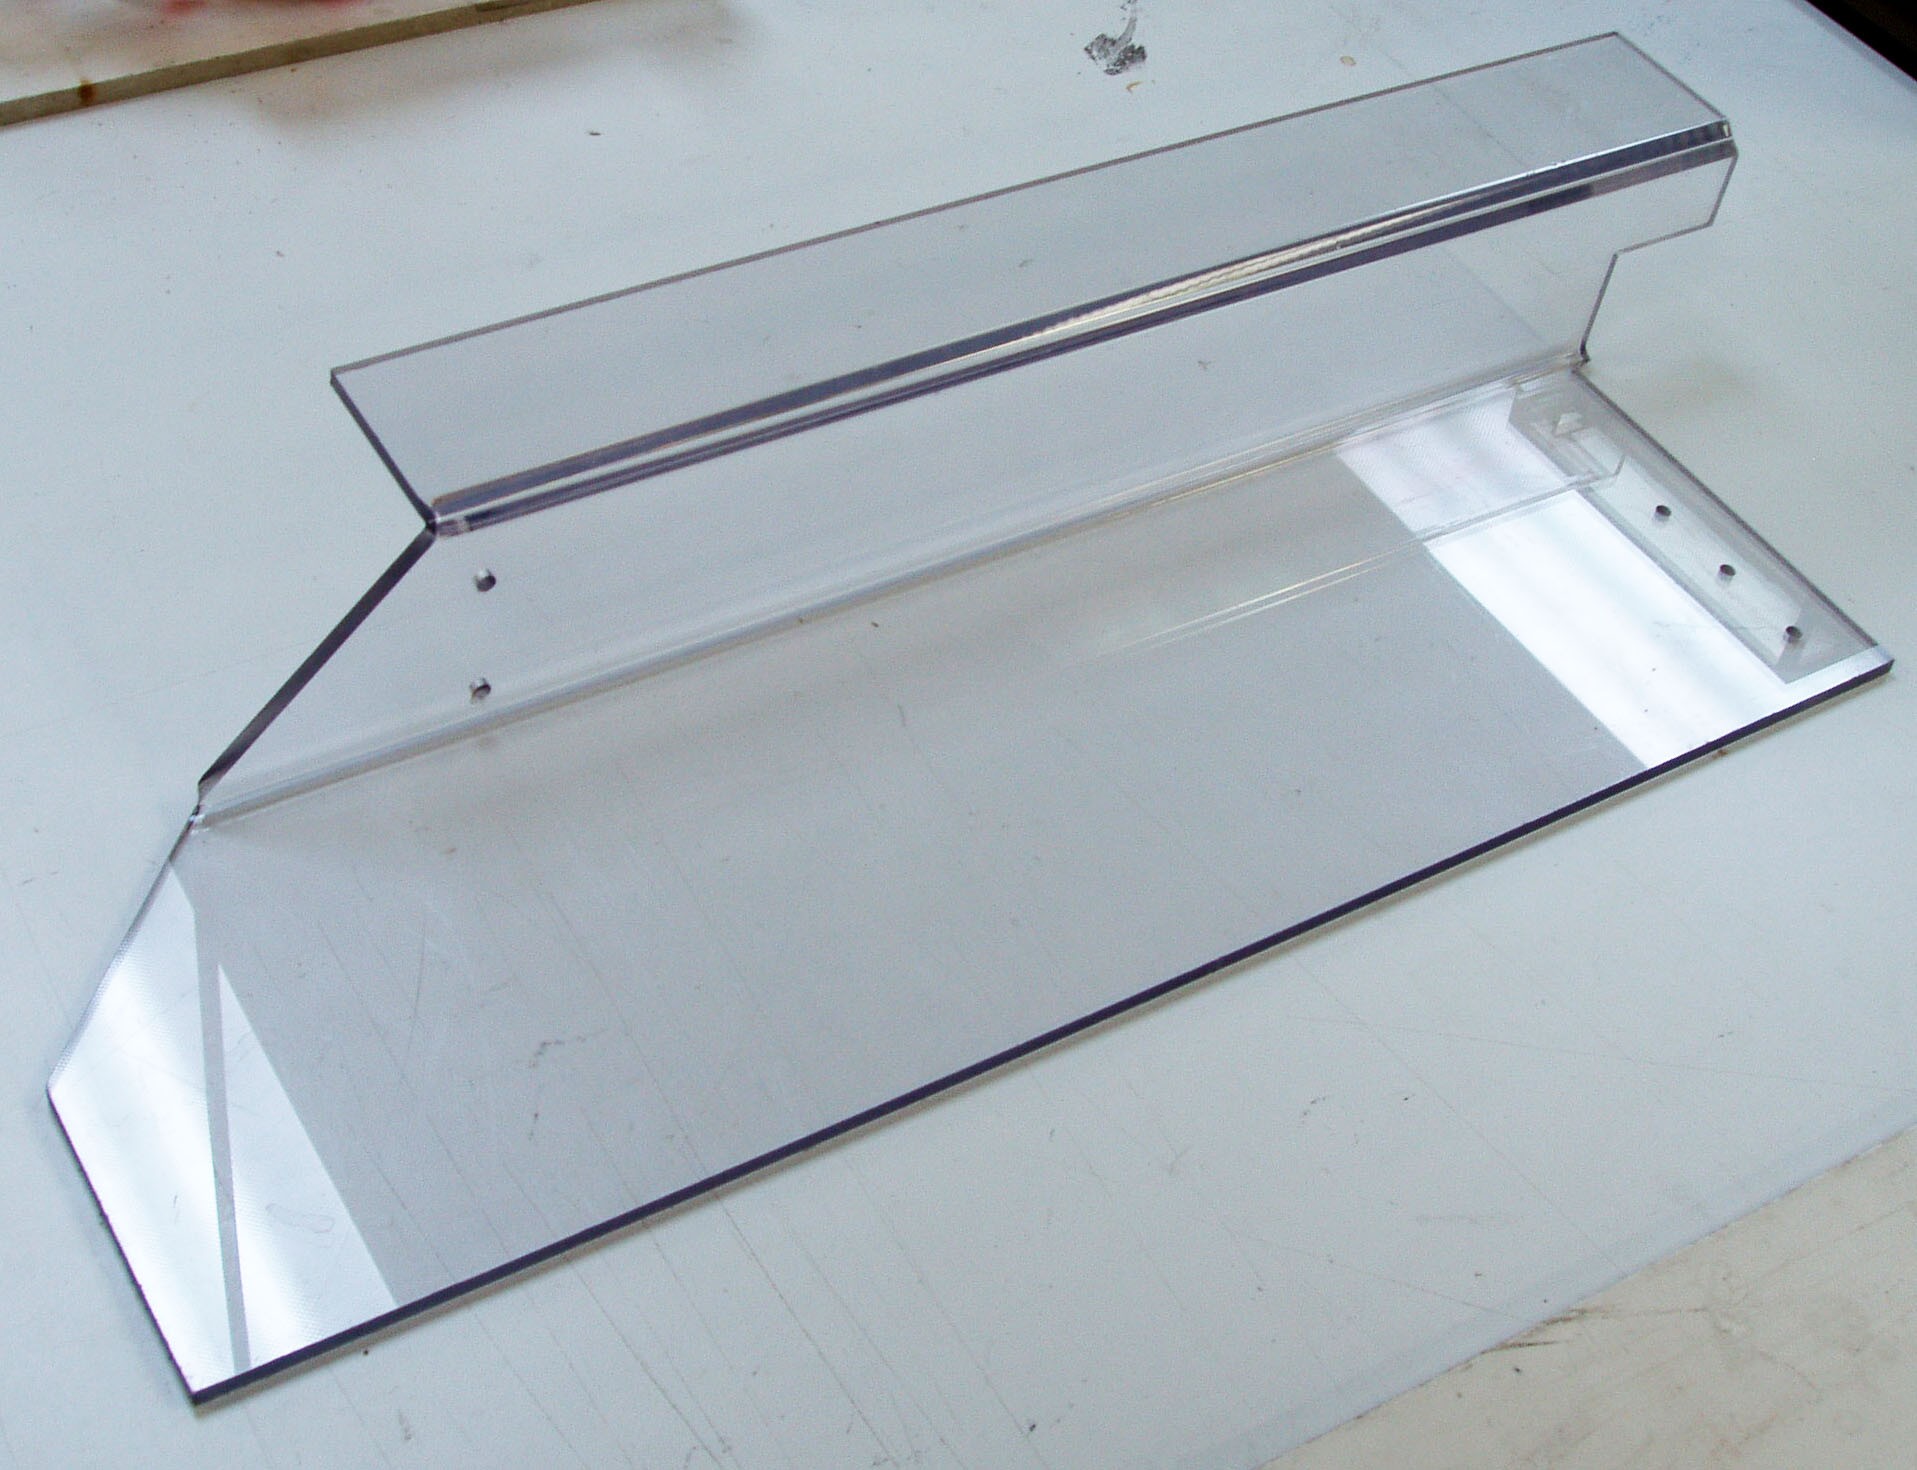 A plexiglass or acrylic plastic sheet